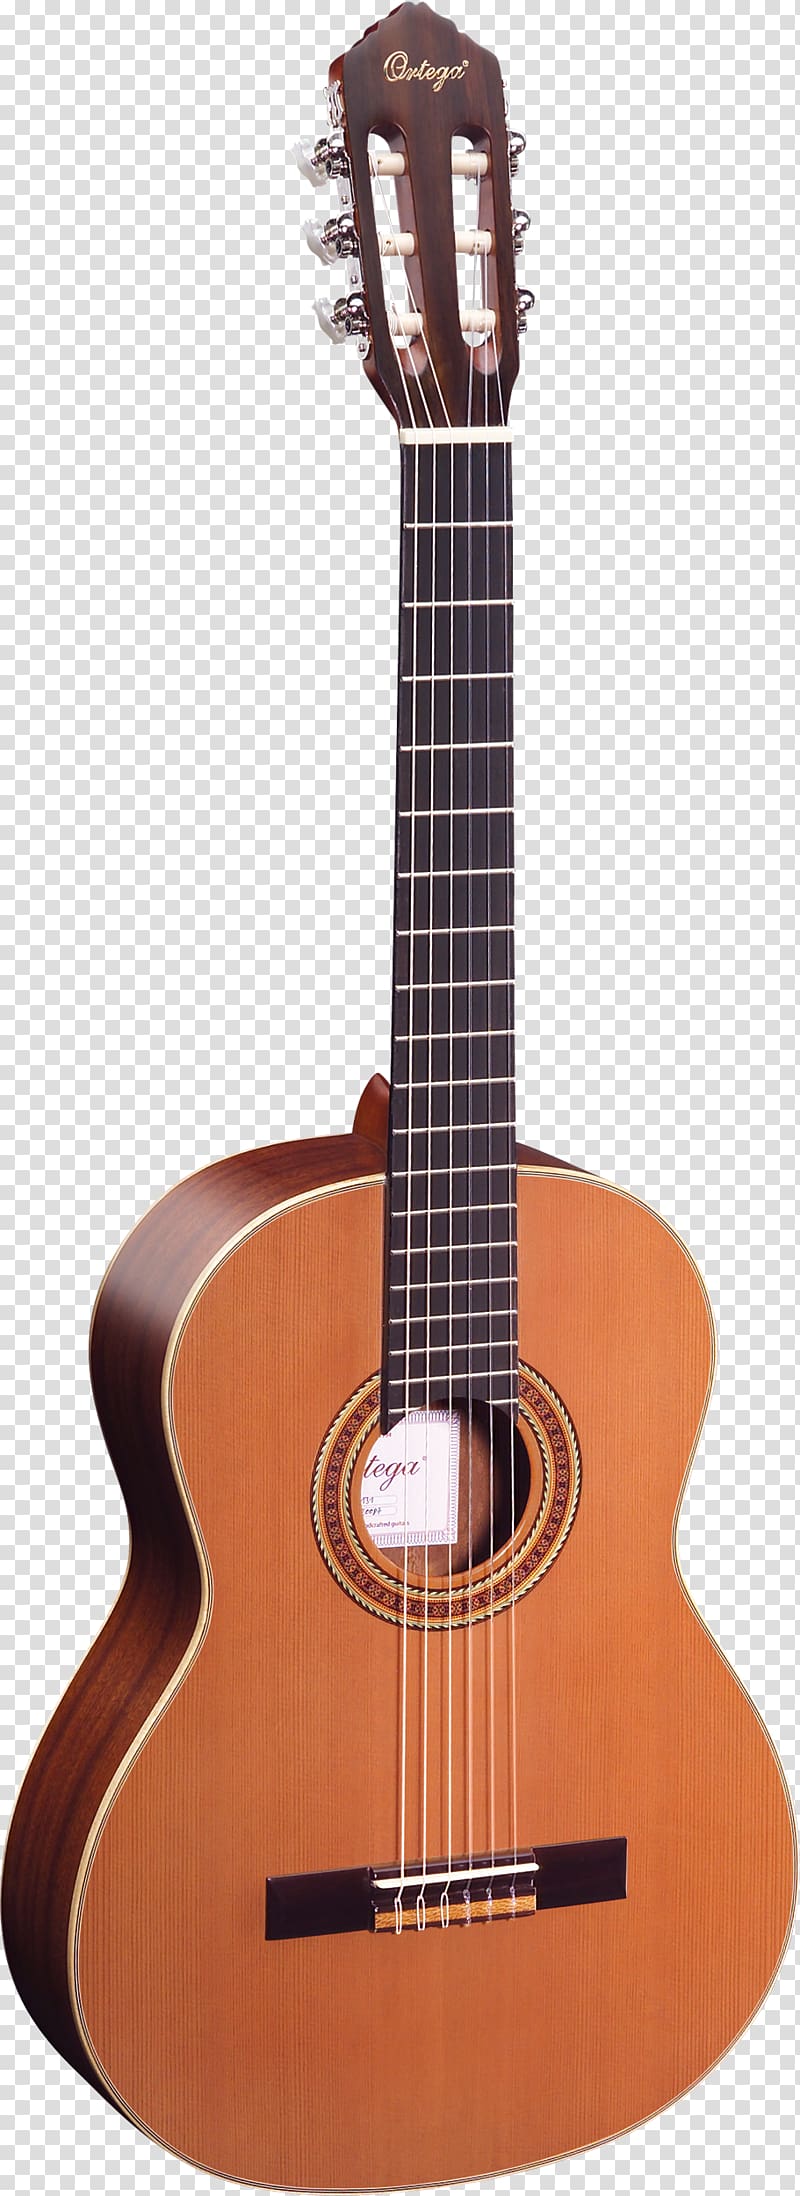 Fender Bullet Steel-string acoustic guitar Classical guitar Musical Instruments, amancio ortega transparent background PNG clipart